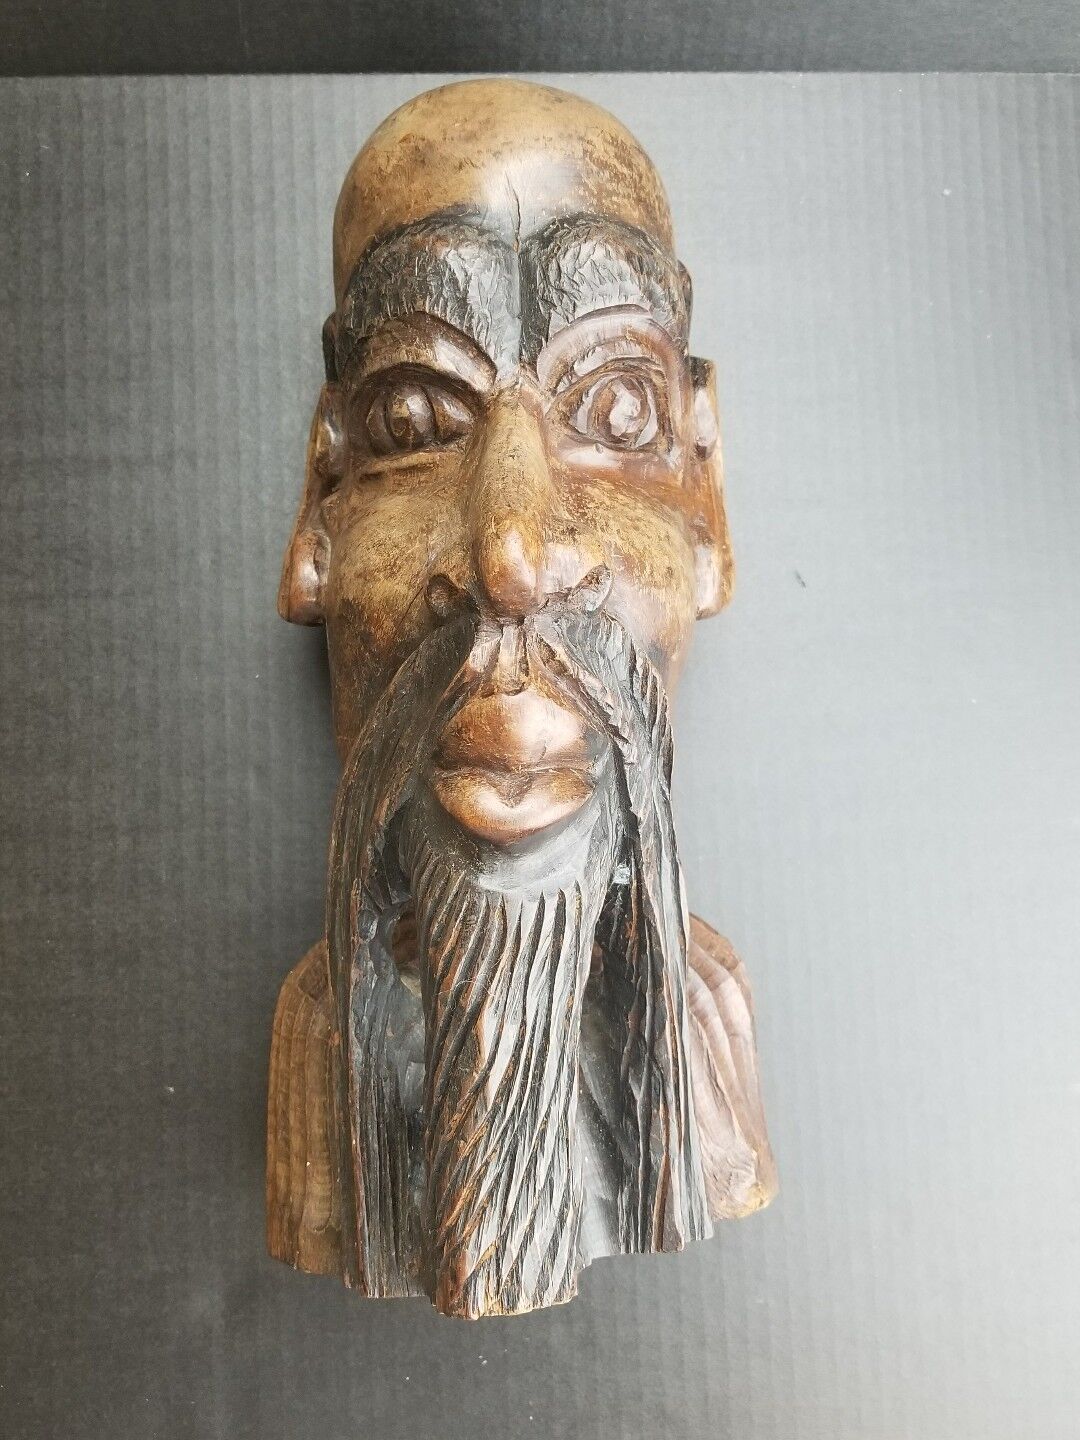 Hand Carved Wood Statue Salt Marsh PA 1972 Cornel Boyd old man DECOR